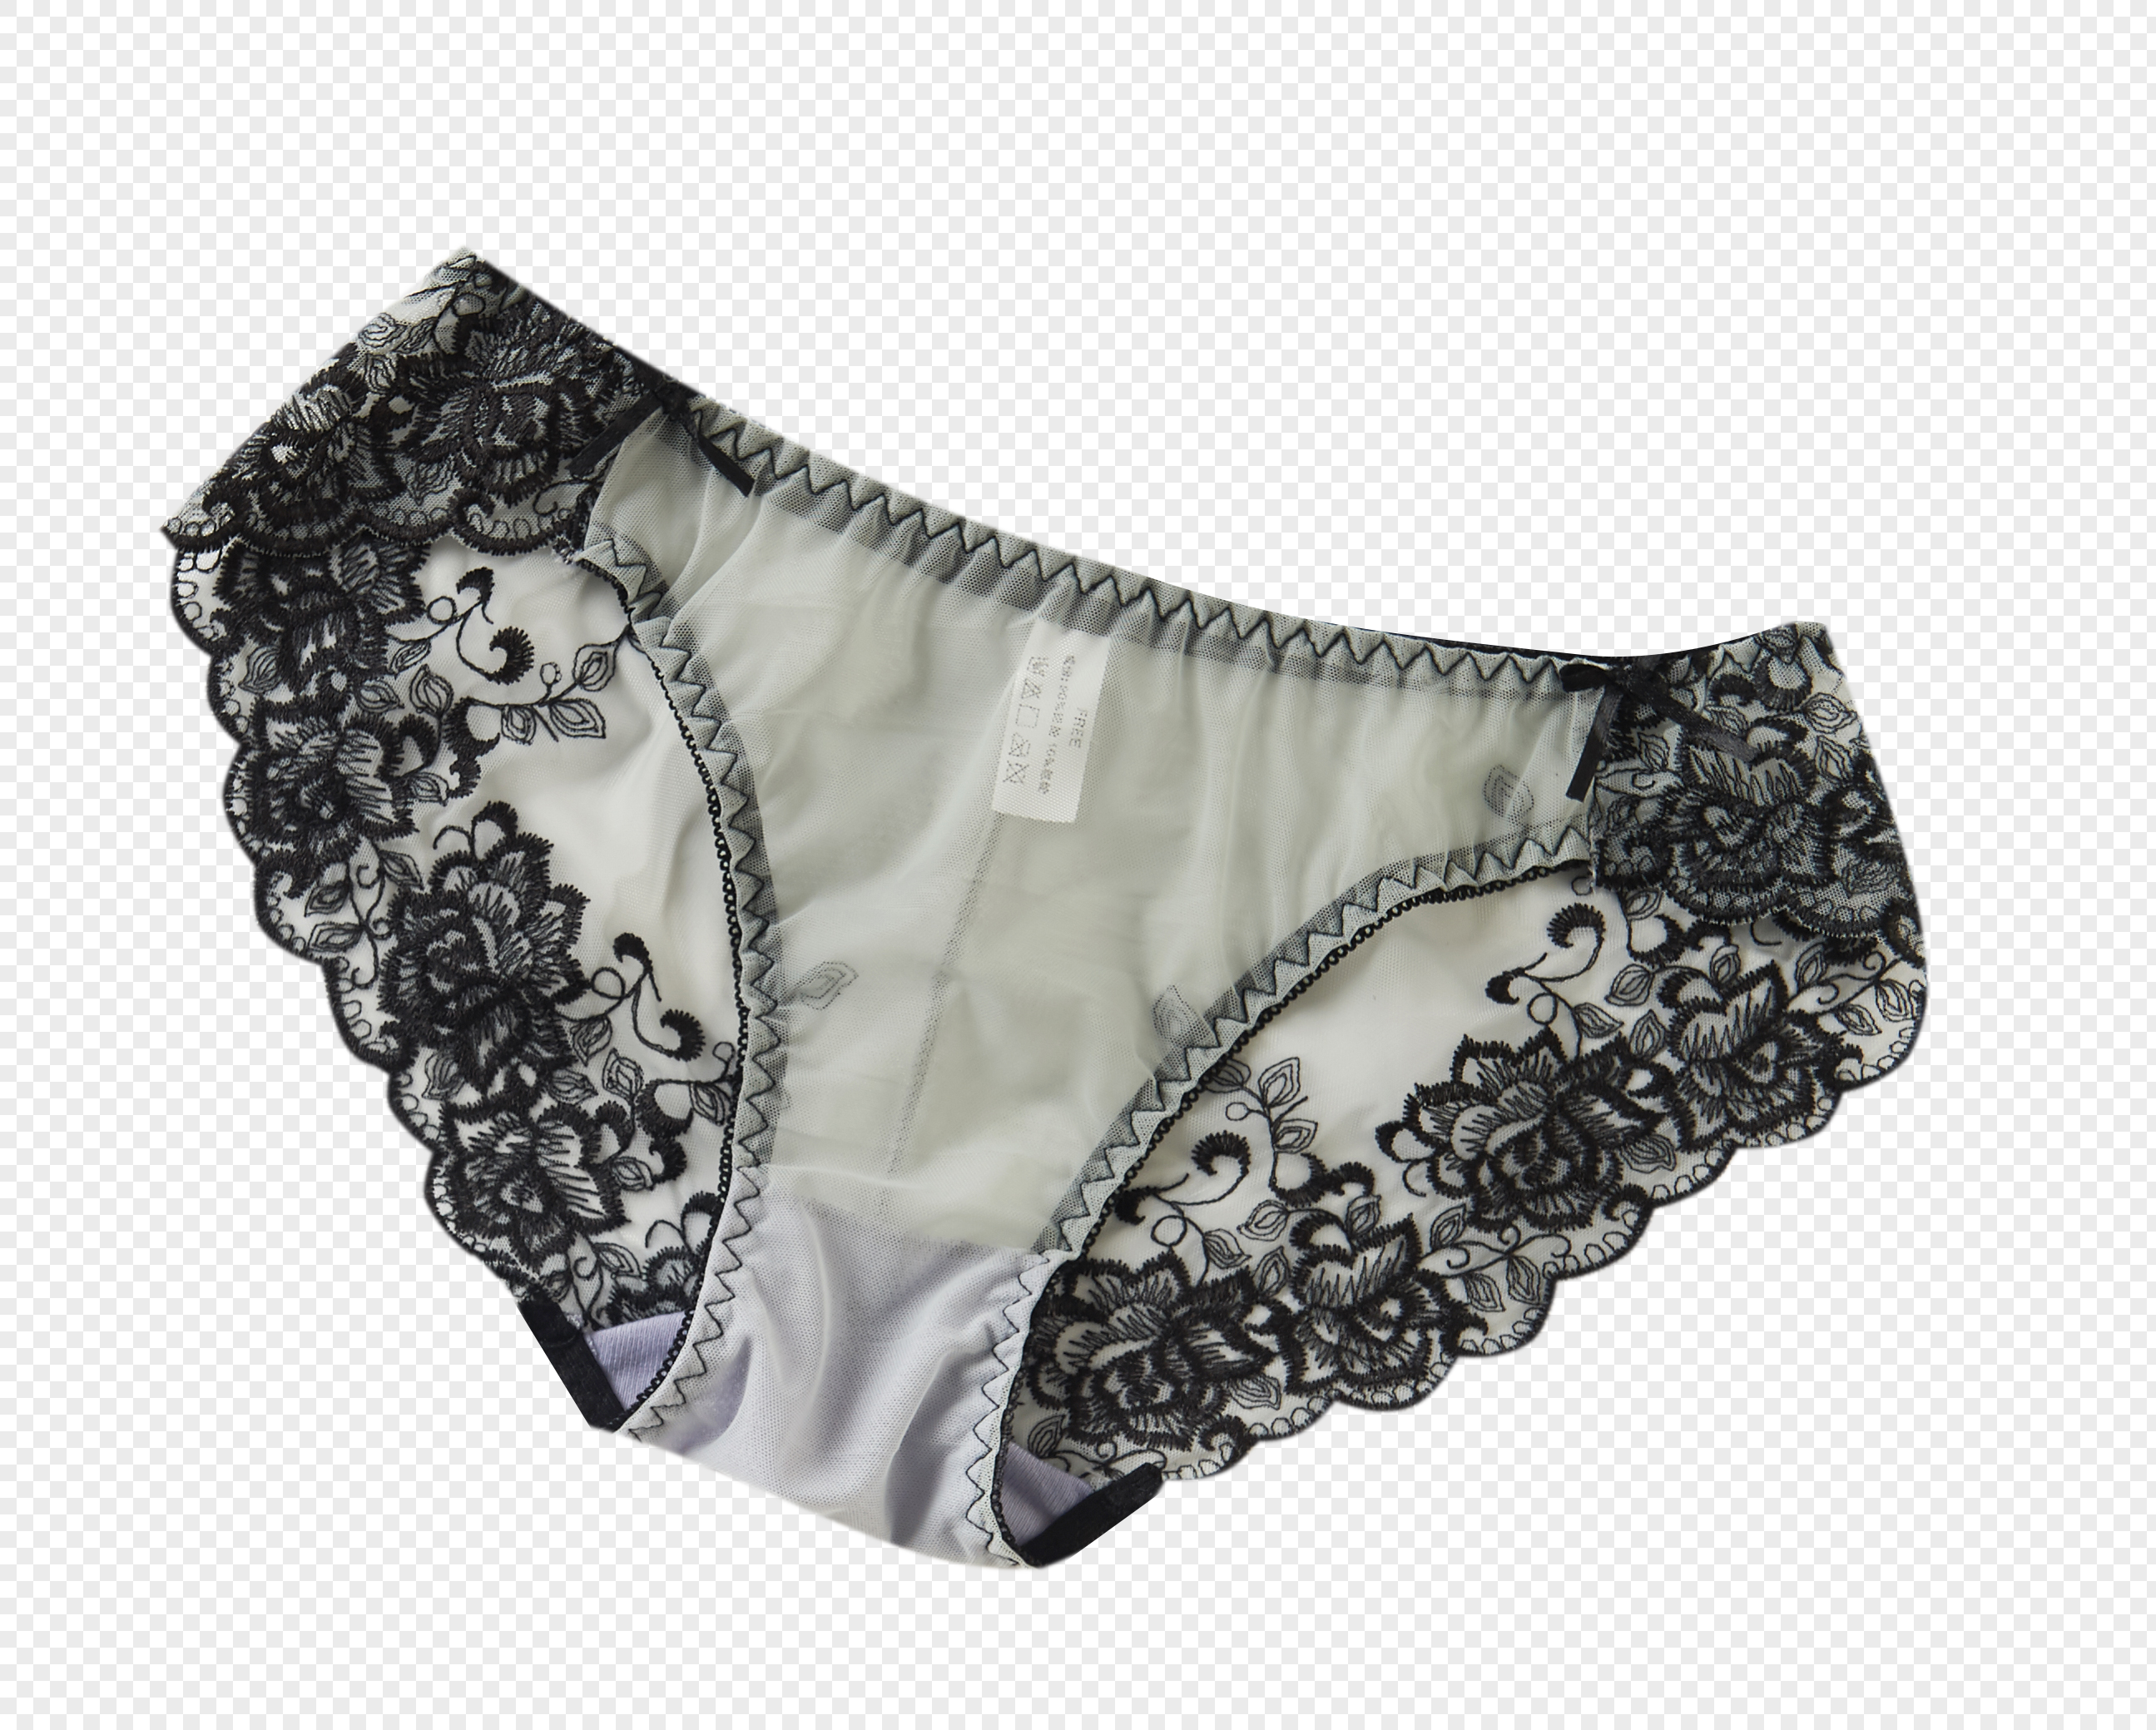 Underwear PNG Transparent Images Free Download